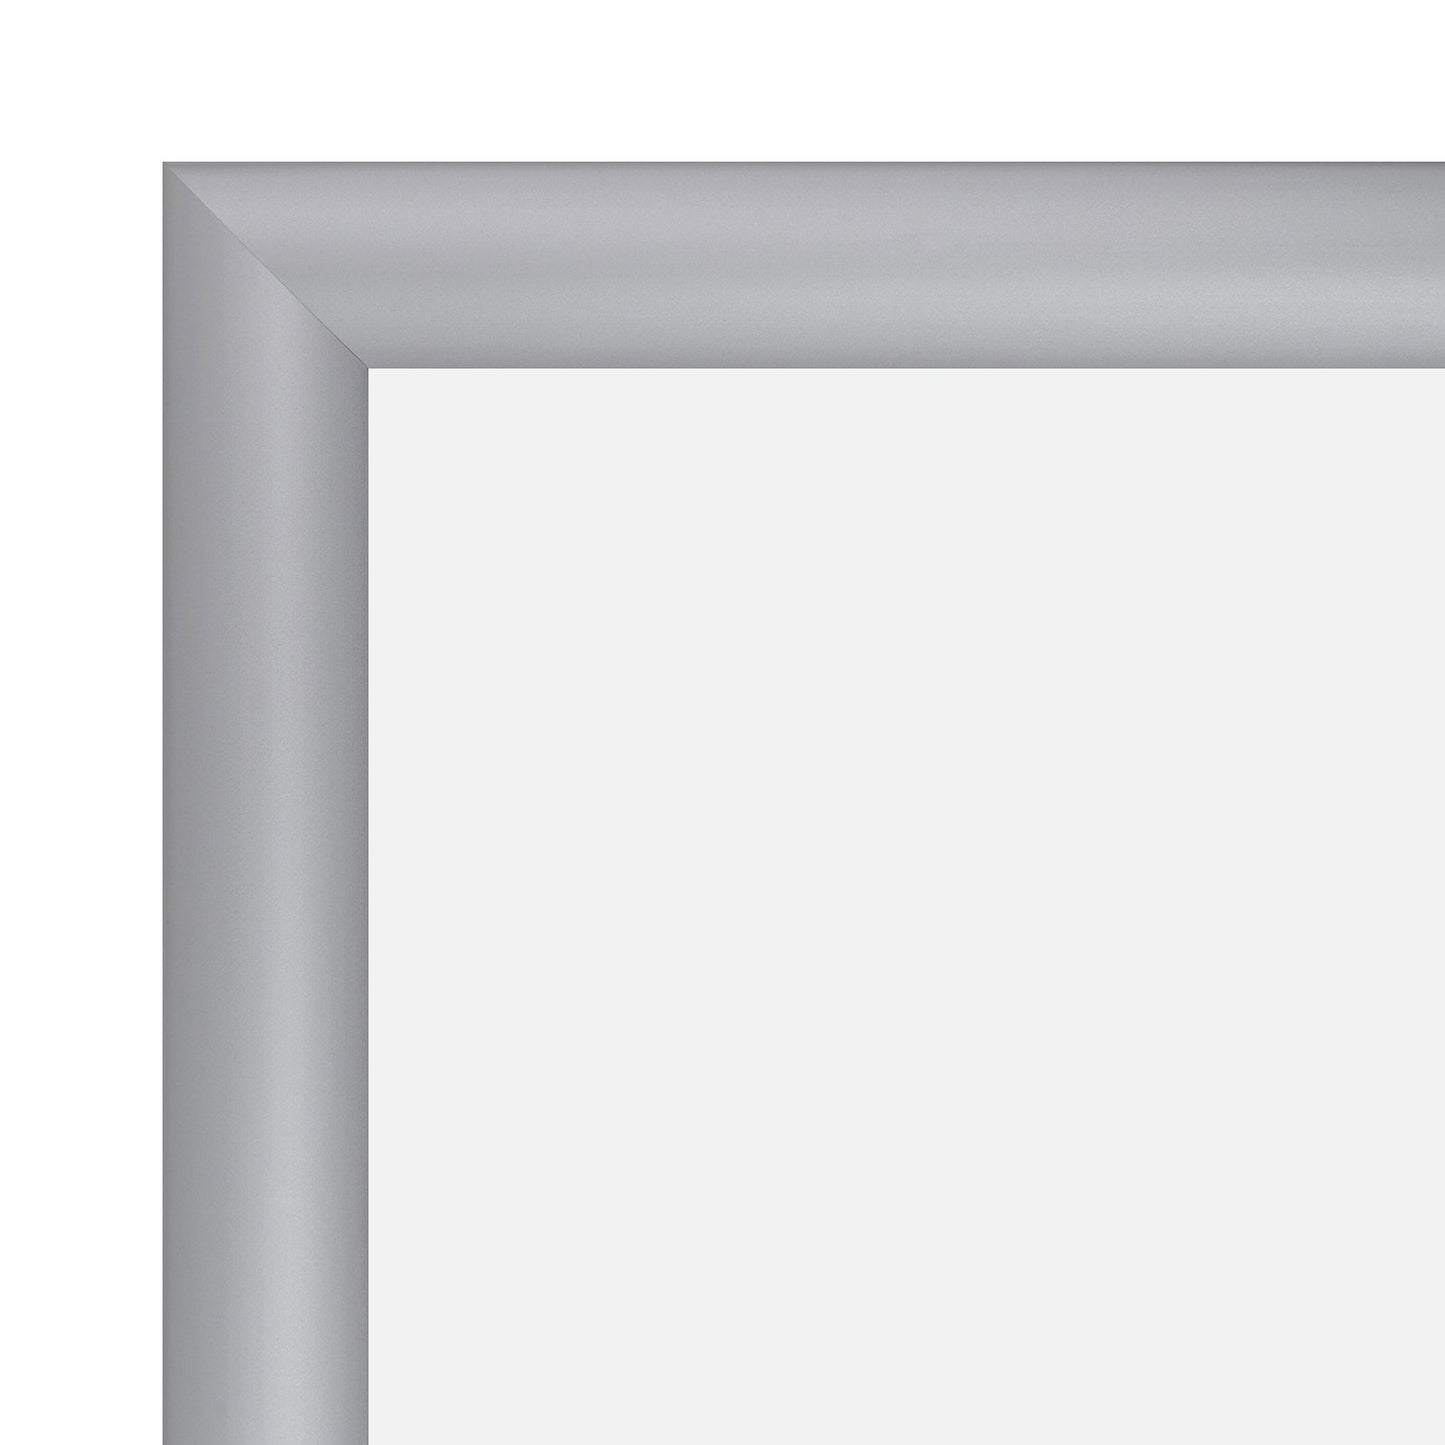 21.59 x 27.94 cm Silver Snap Frame - 30MM Profile